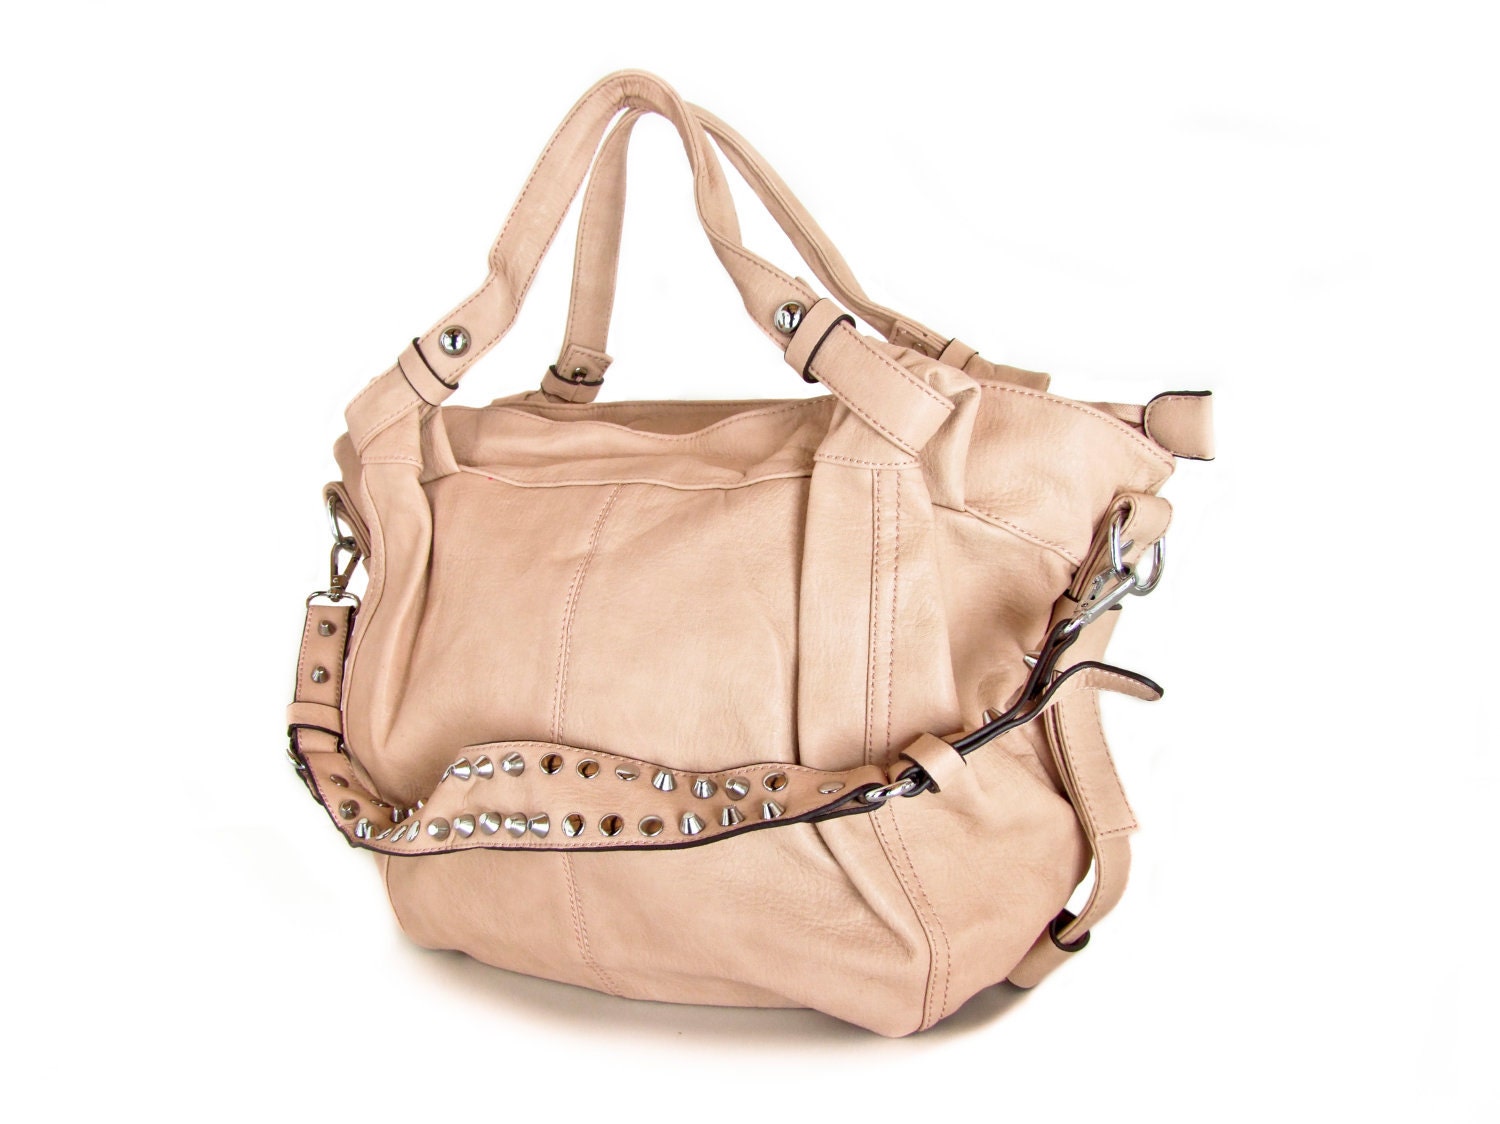 vegan leather handbag purse pale pink the by VeganLeatherHandbags